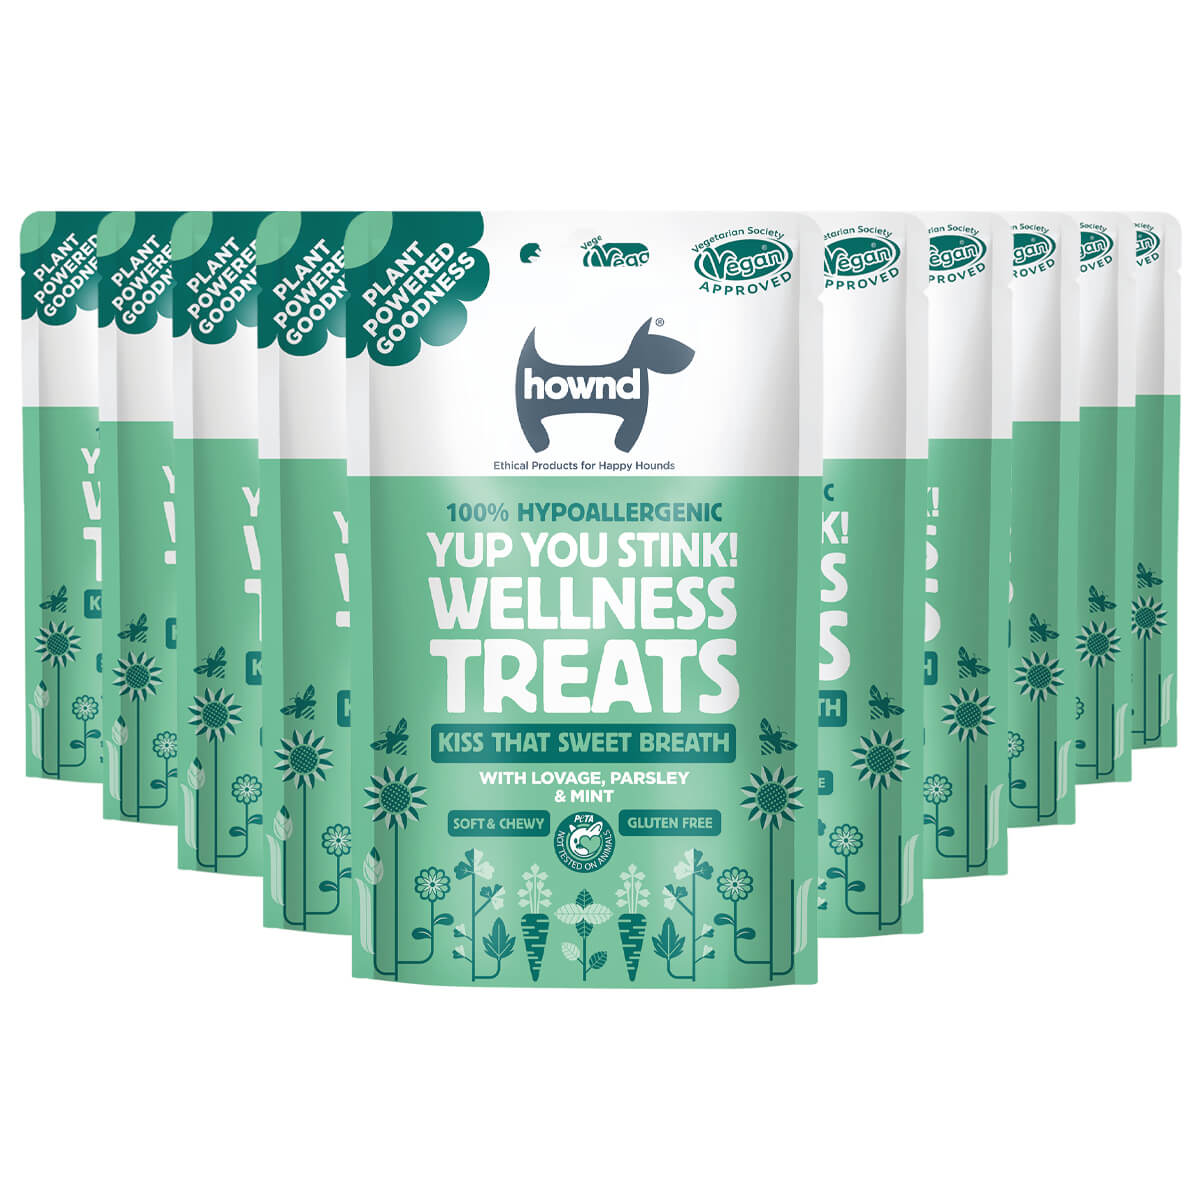 hownd yup you stink vegan hypoallergenic wellness treats x 10 pack